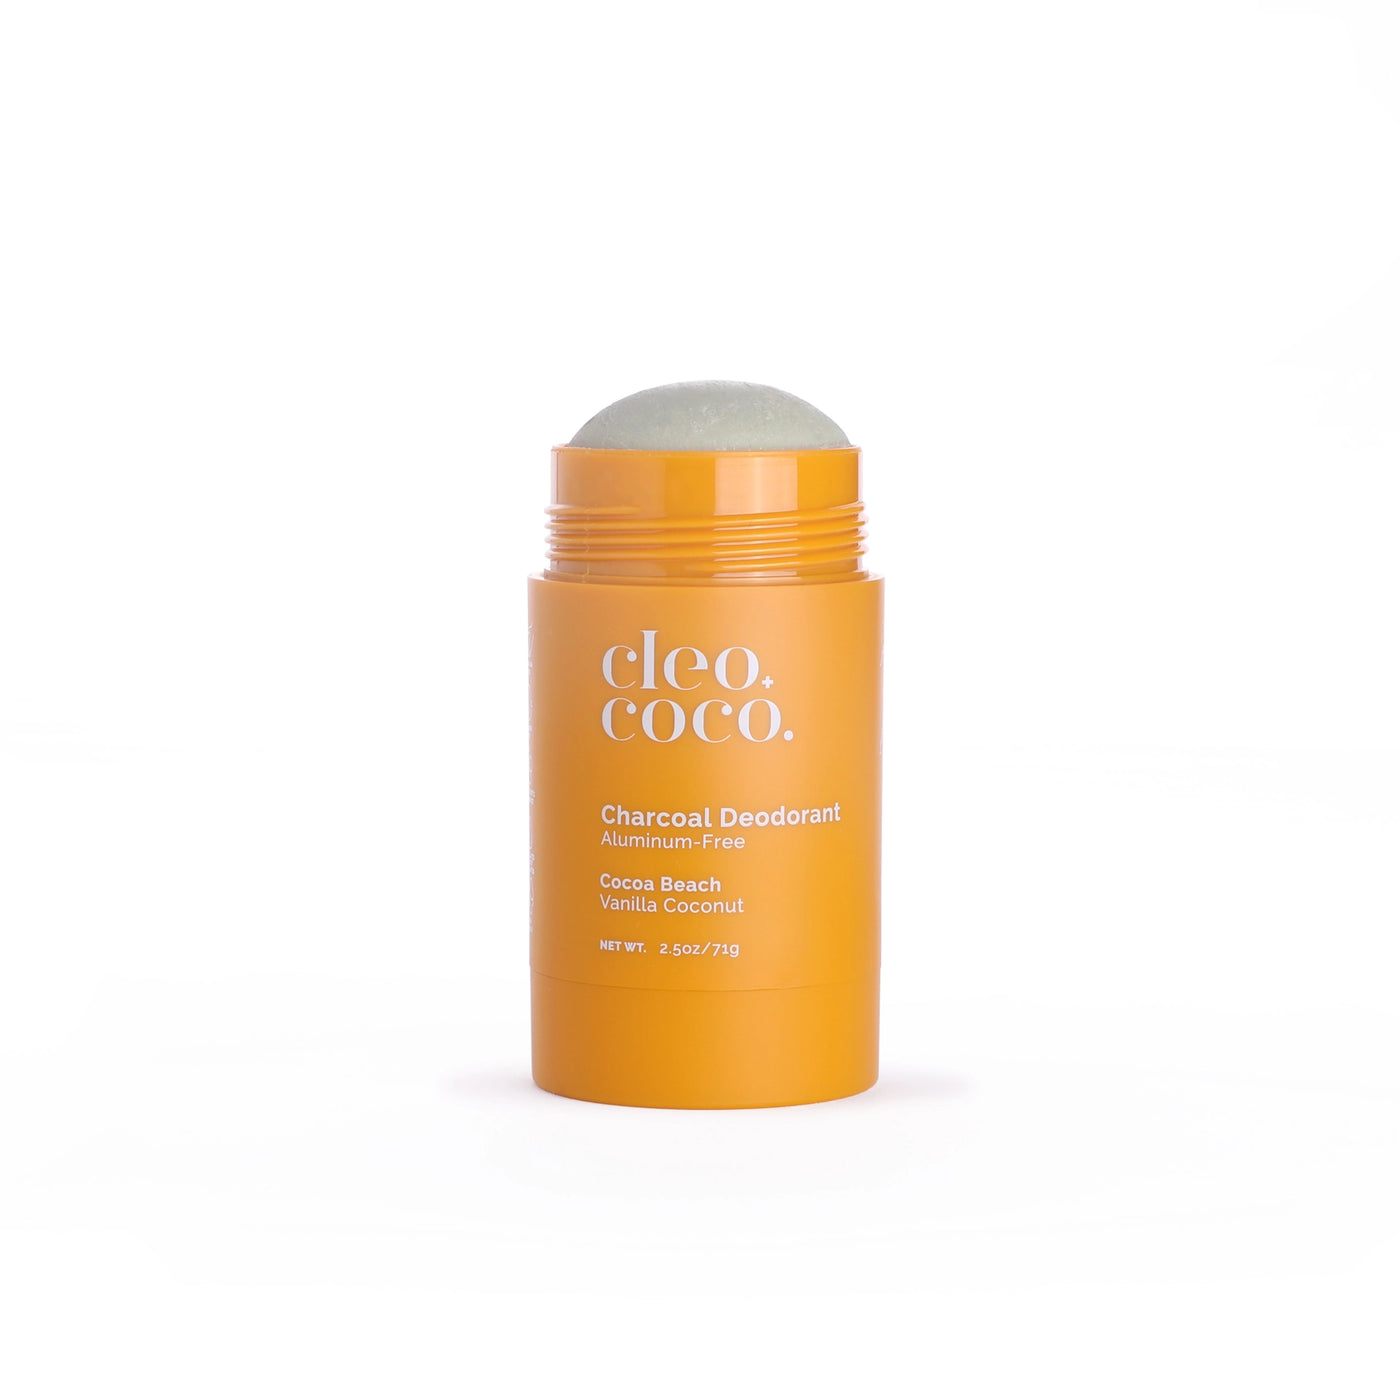 Cleo.Coco. Charcoal Deodorant - Vanilla Coconut